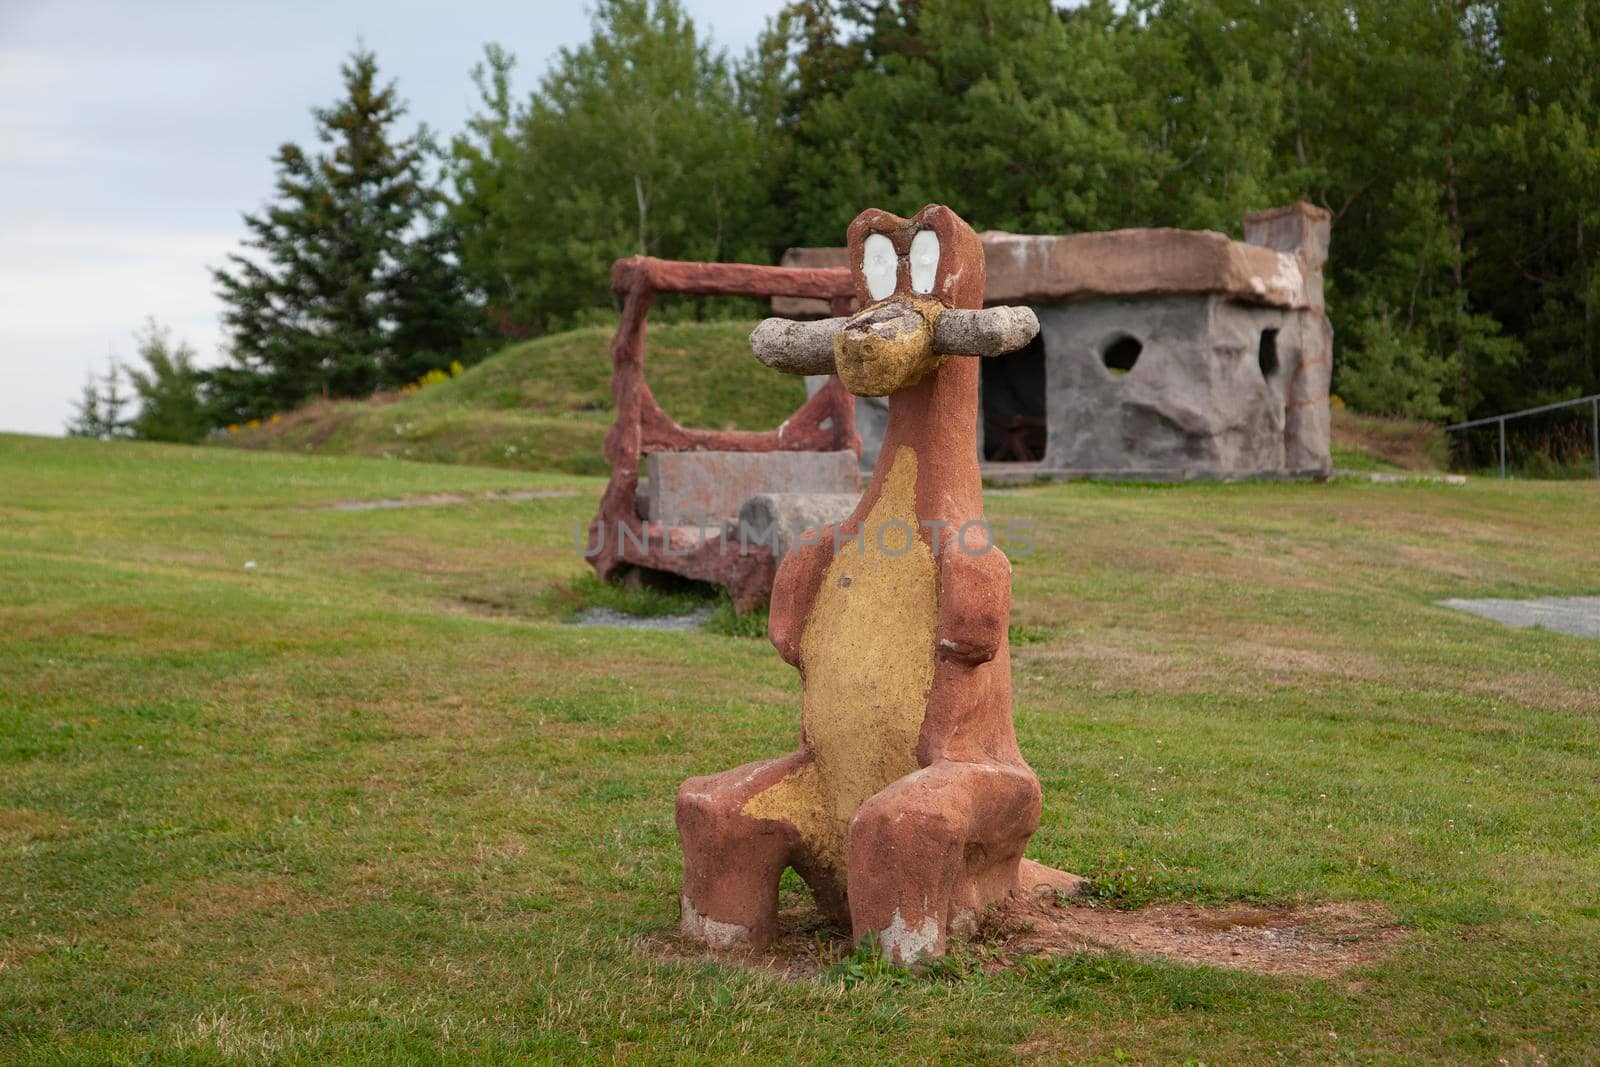  August 18, 2019 - Stewiacke, Nova Scotia - cute flintstone themed objects at Mastadon Ridge in Nova Scotia 